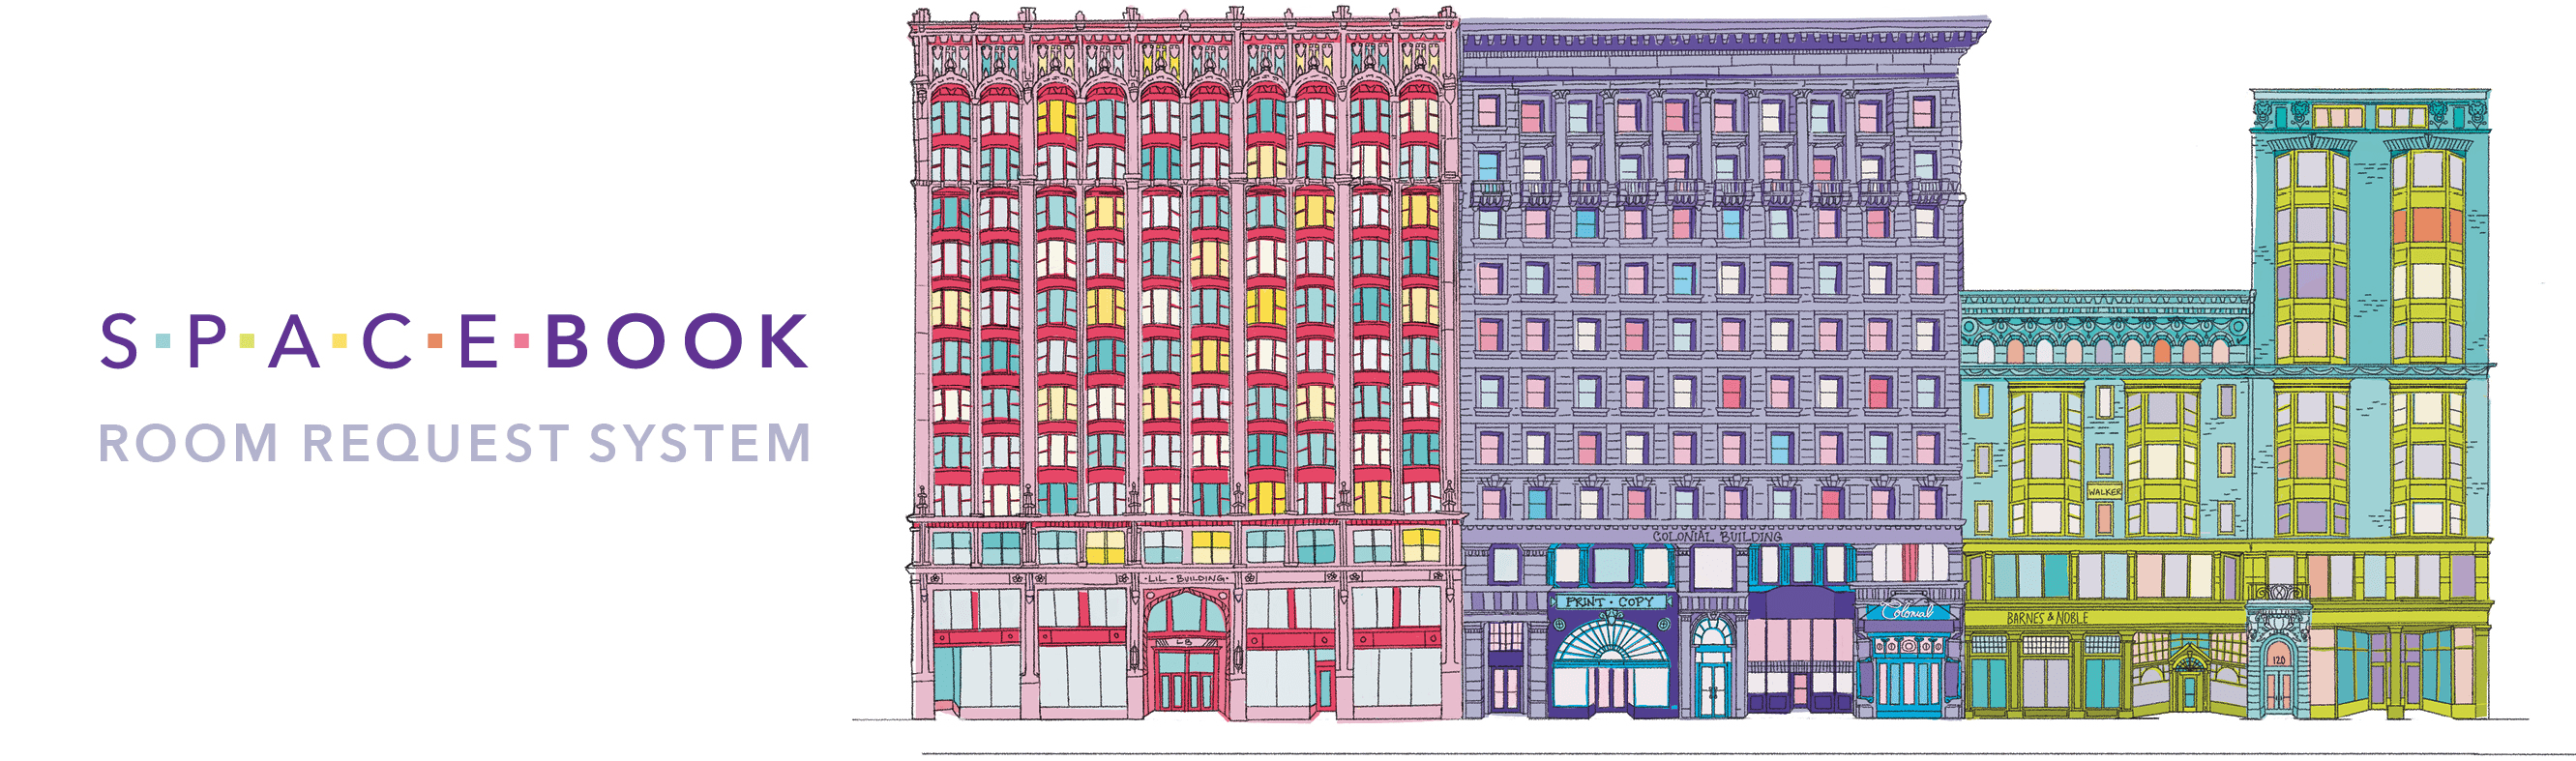 Colorful illustration of Emerson buildings along Boylston Street